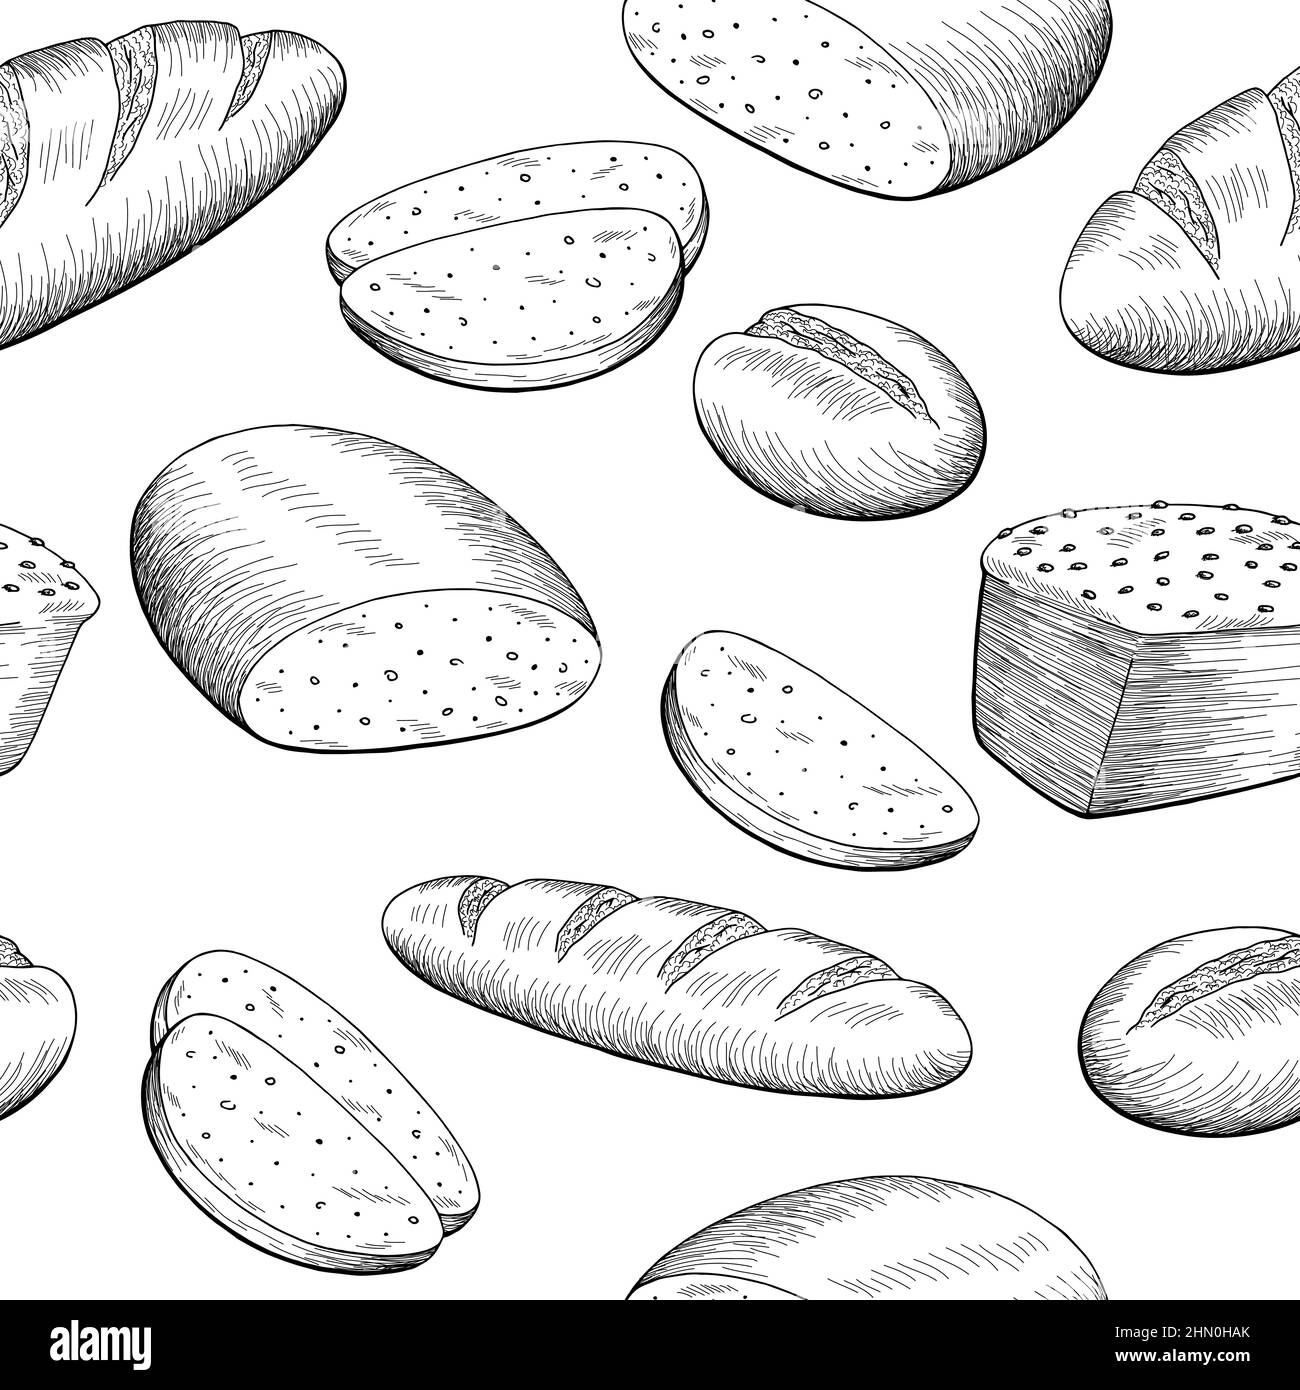 Brot Grafik schwarz weiß nahtlose Muster Hintergrund Skizze Illustration Vektor Stock Vektor